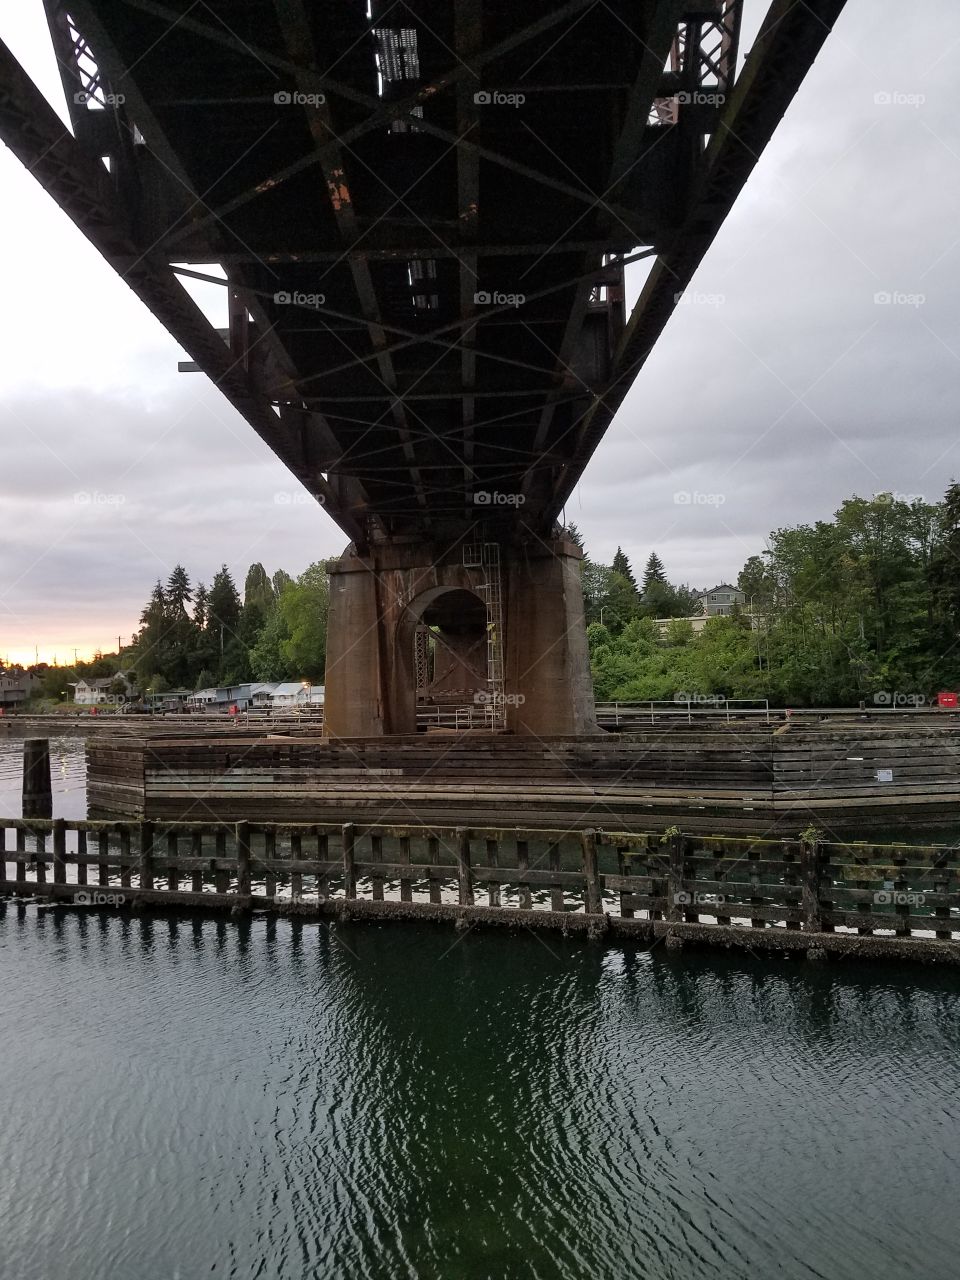 under the train bridge 5/19/2016